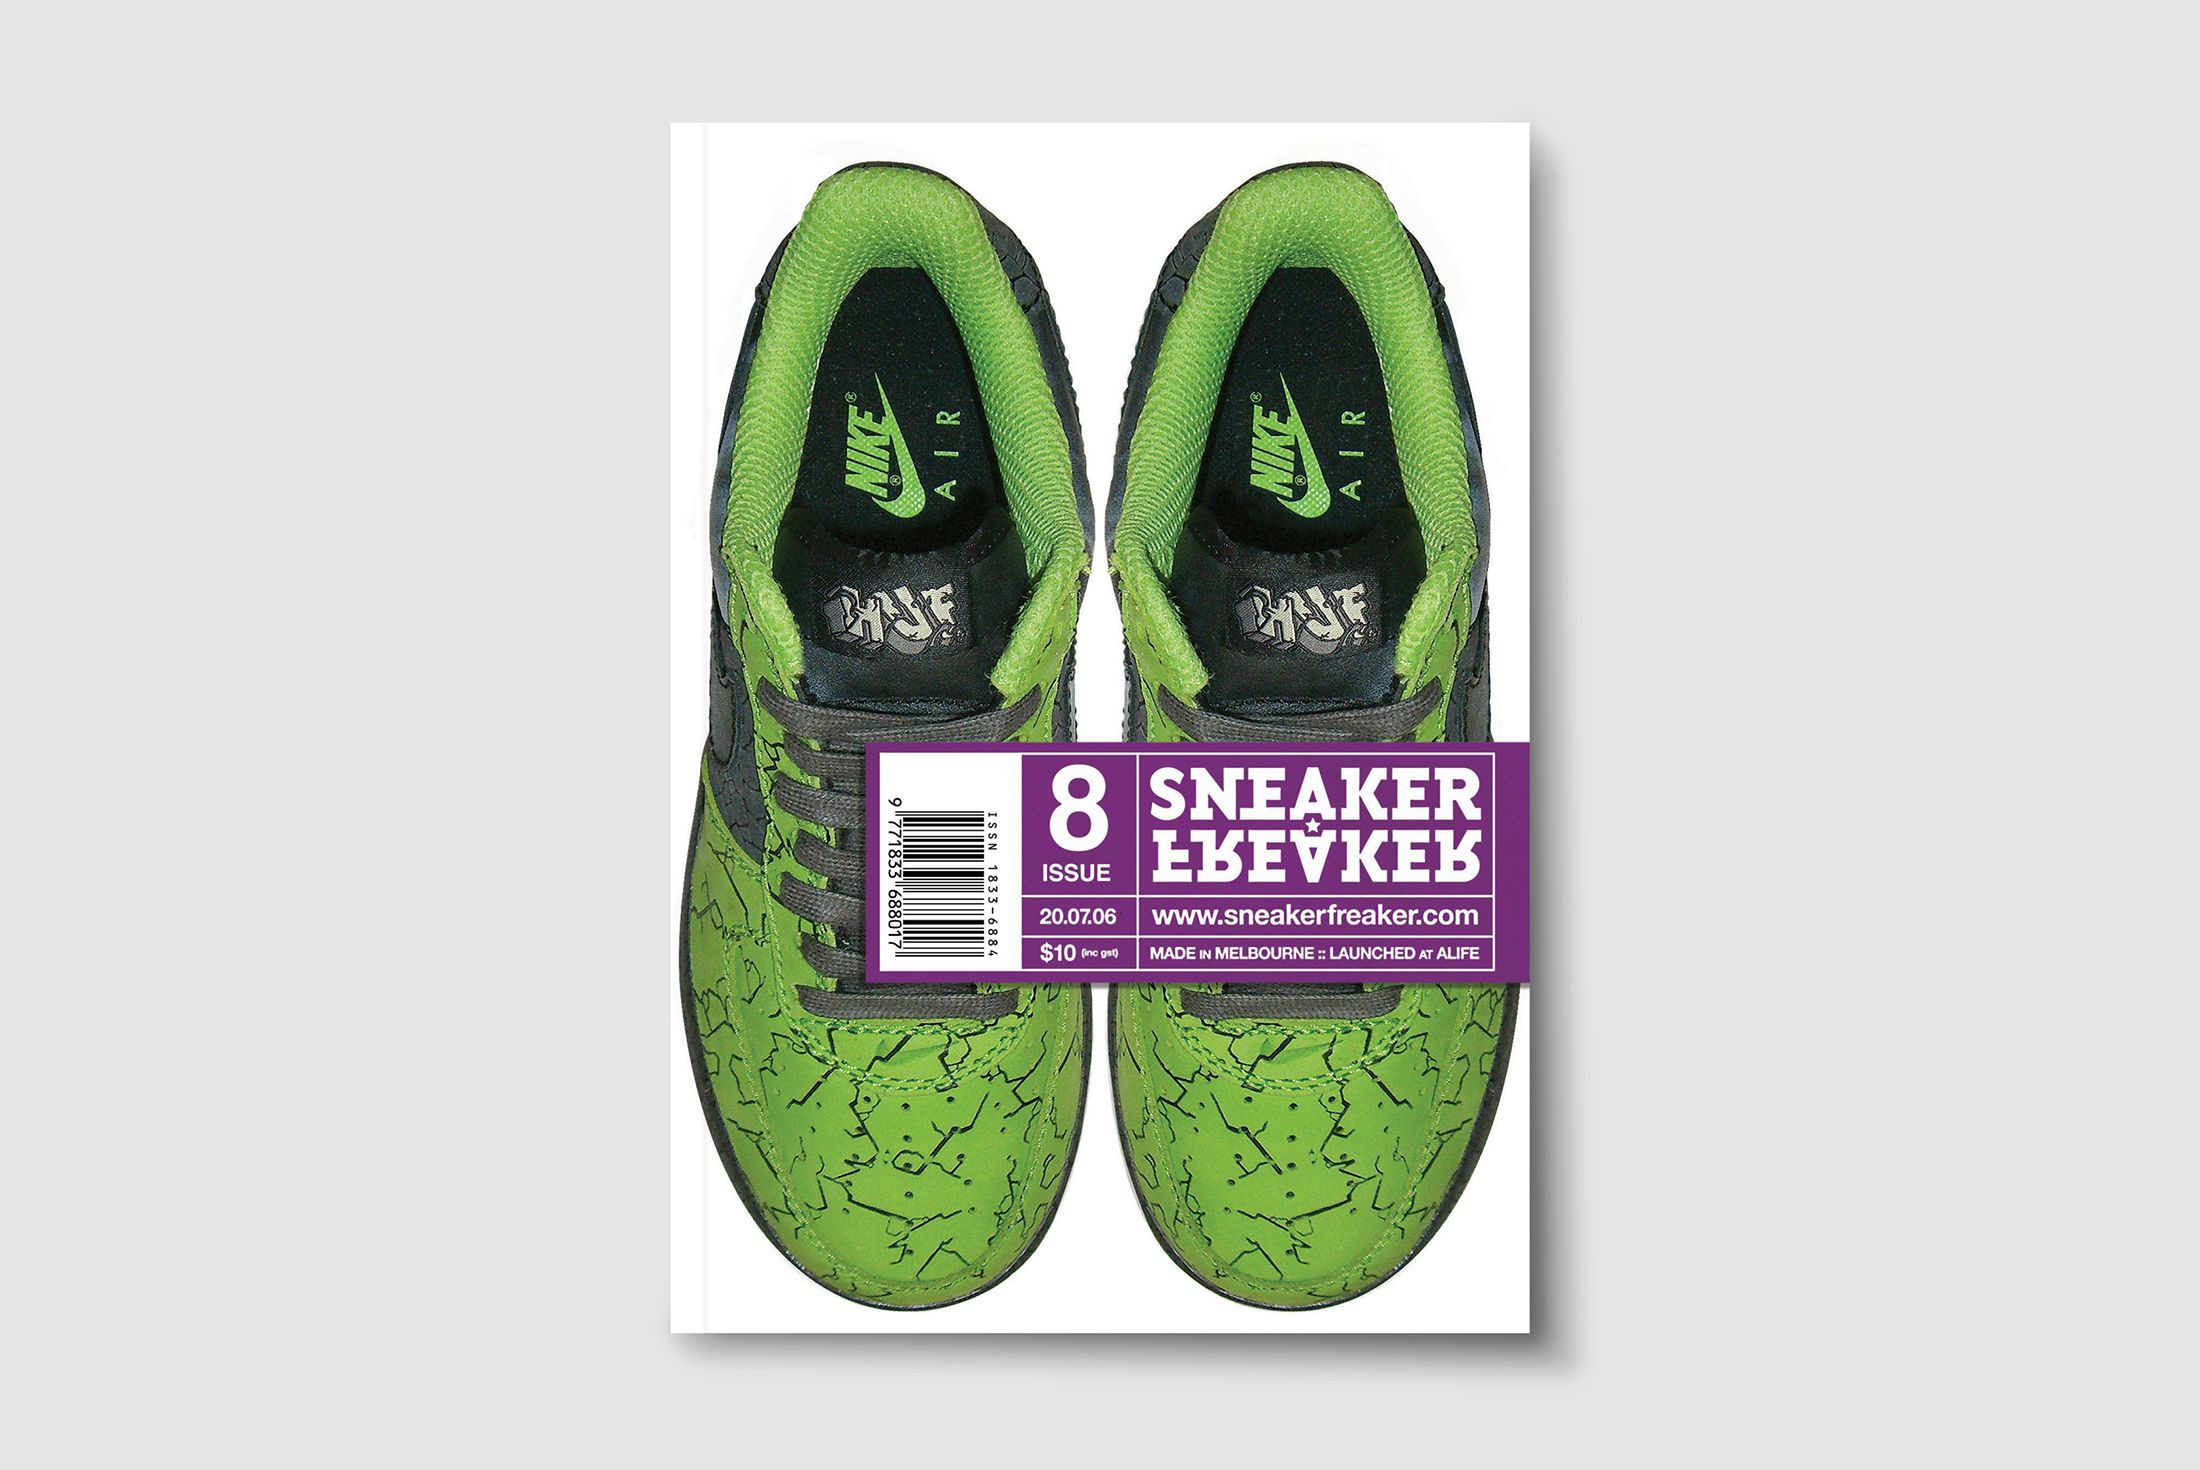 Sneaker Freaker Issues 1-10